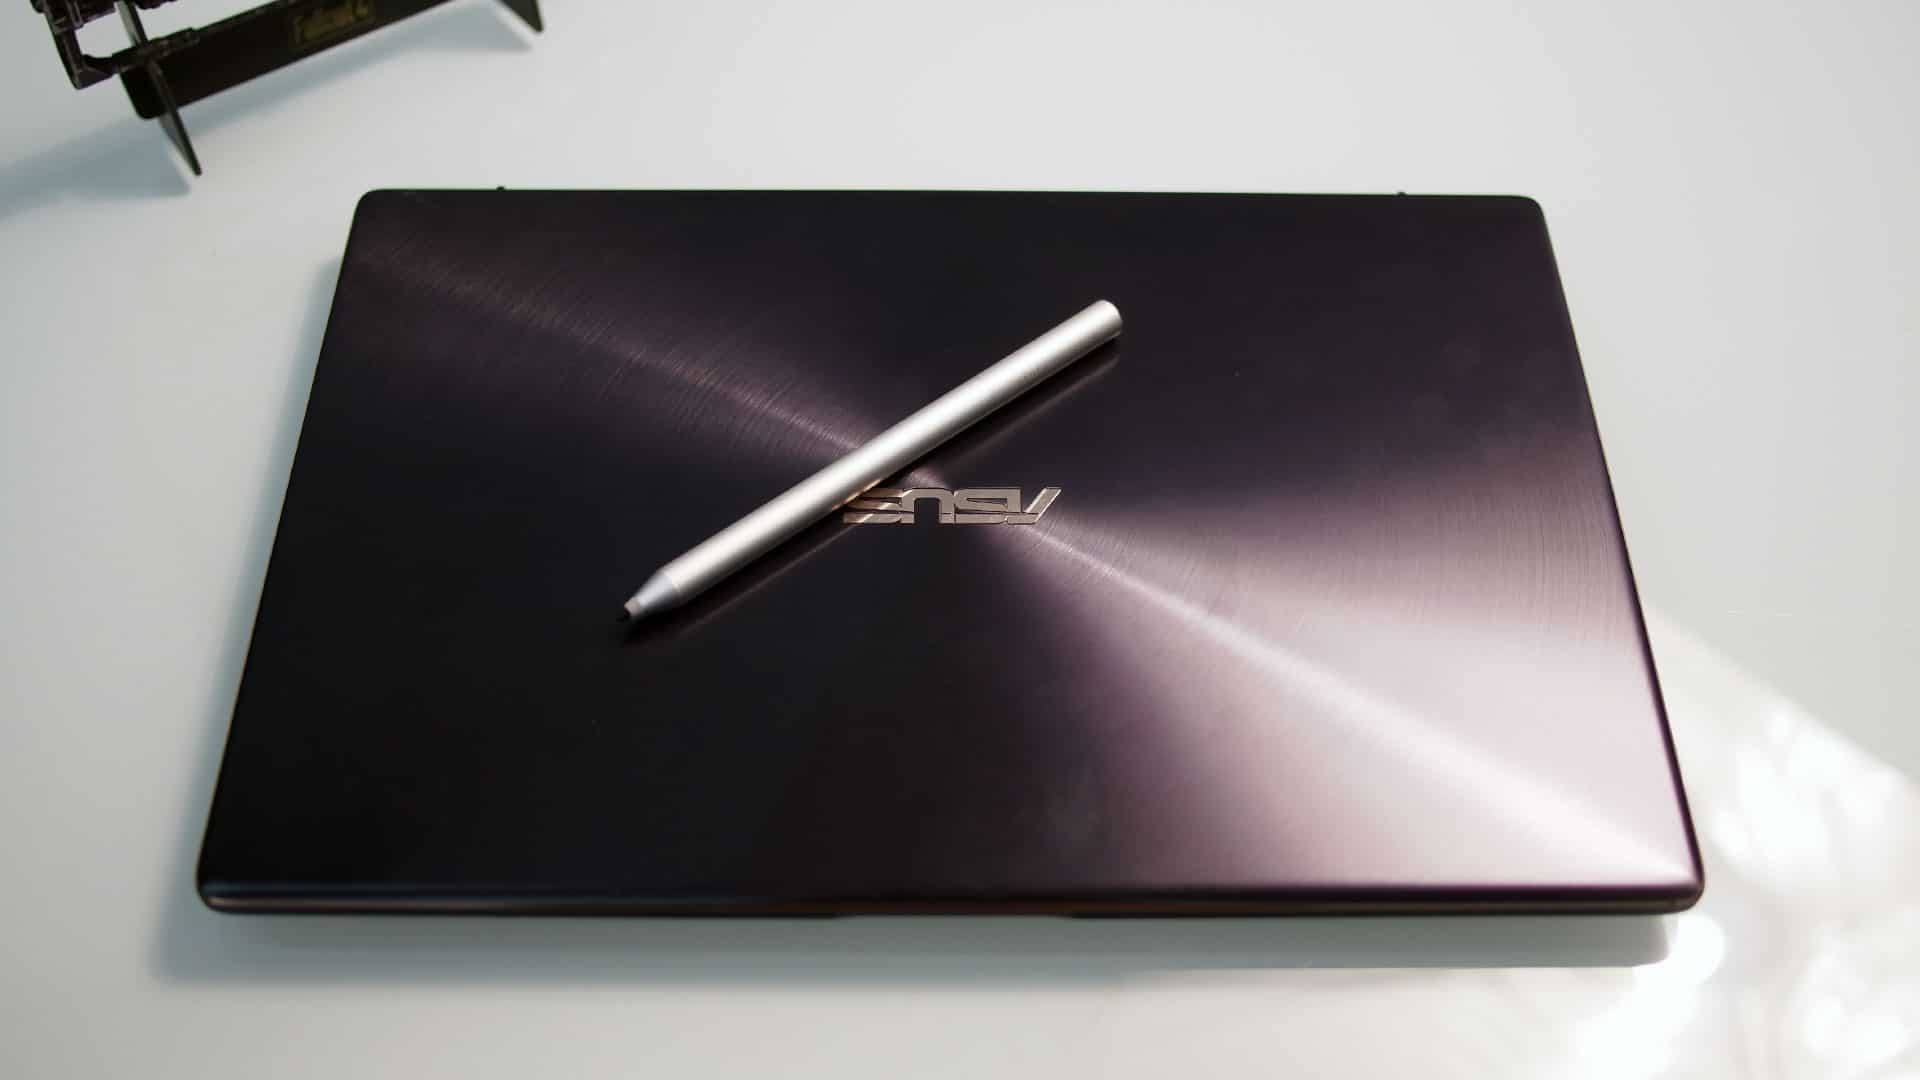 Asus Zenbook S UX391U Review - The Pinnacle of Portable Computing